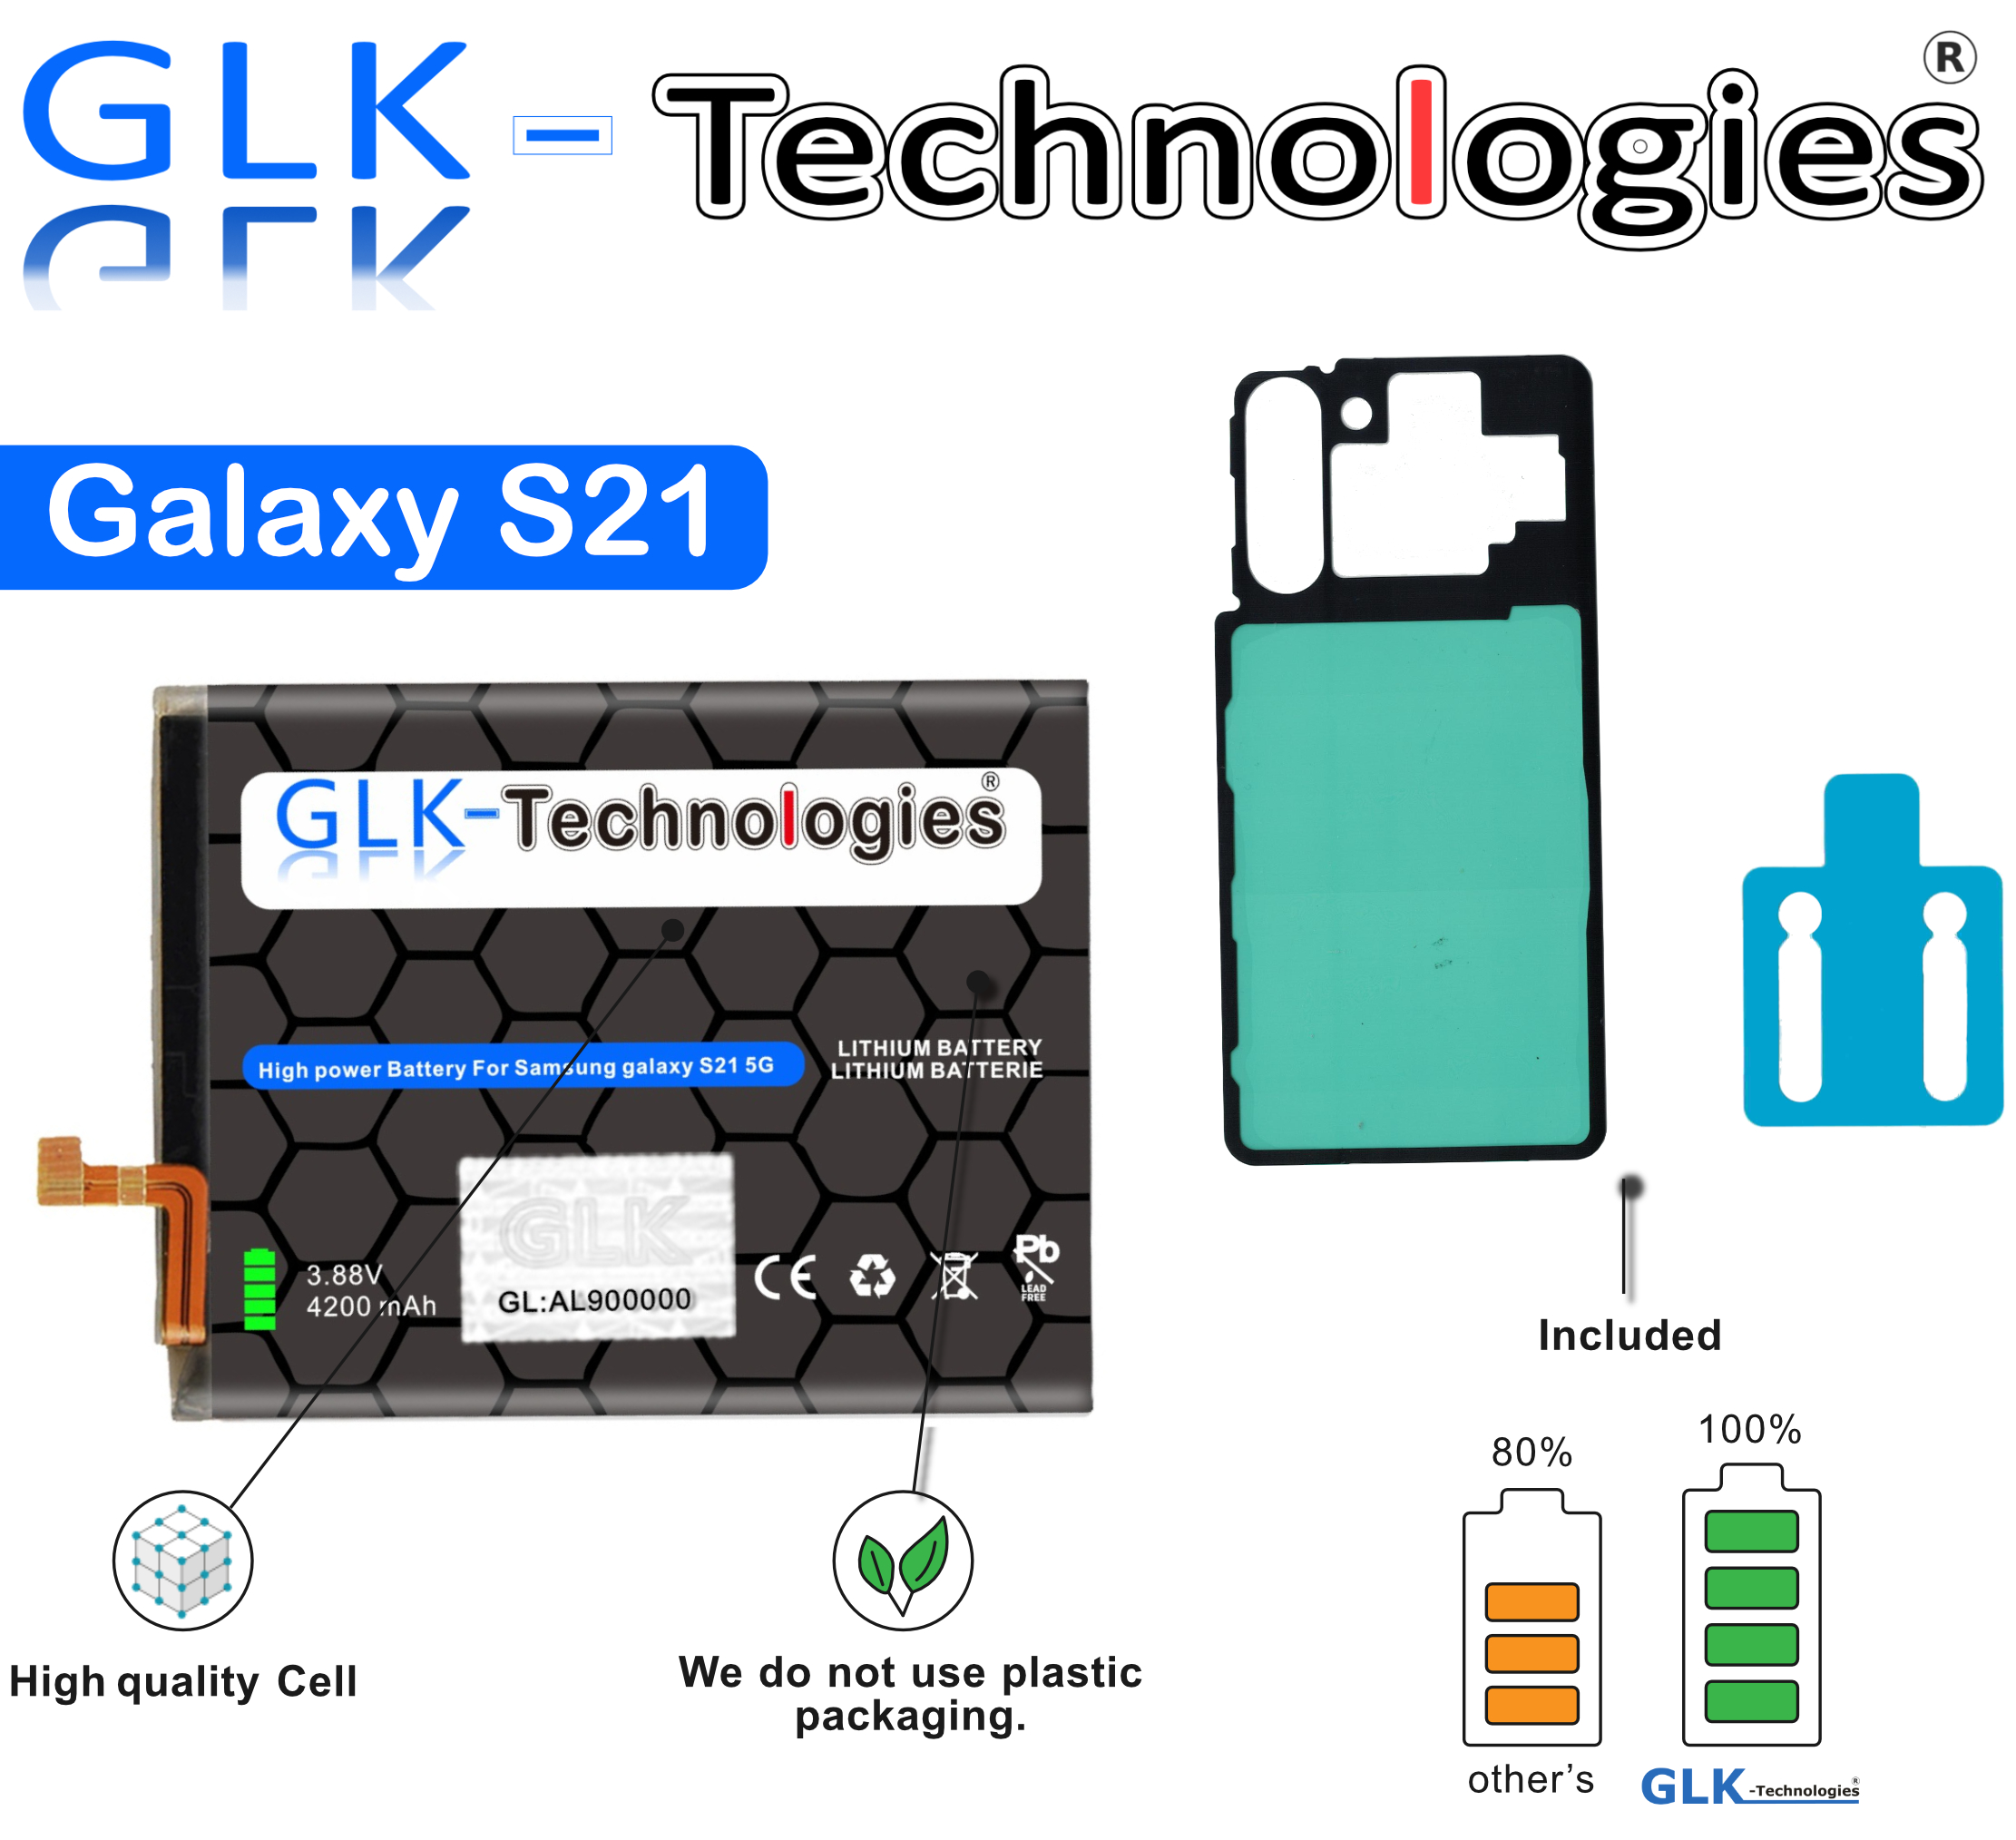 GLK-TECHNOLOGIES Samsung Galaxy S21 inkl. 5G Lithium-Ionen-Akku Akku, 4200mAh EB-BG991ABY Klebebandsätze Smartphone SM-G991B 2x 4200mAh